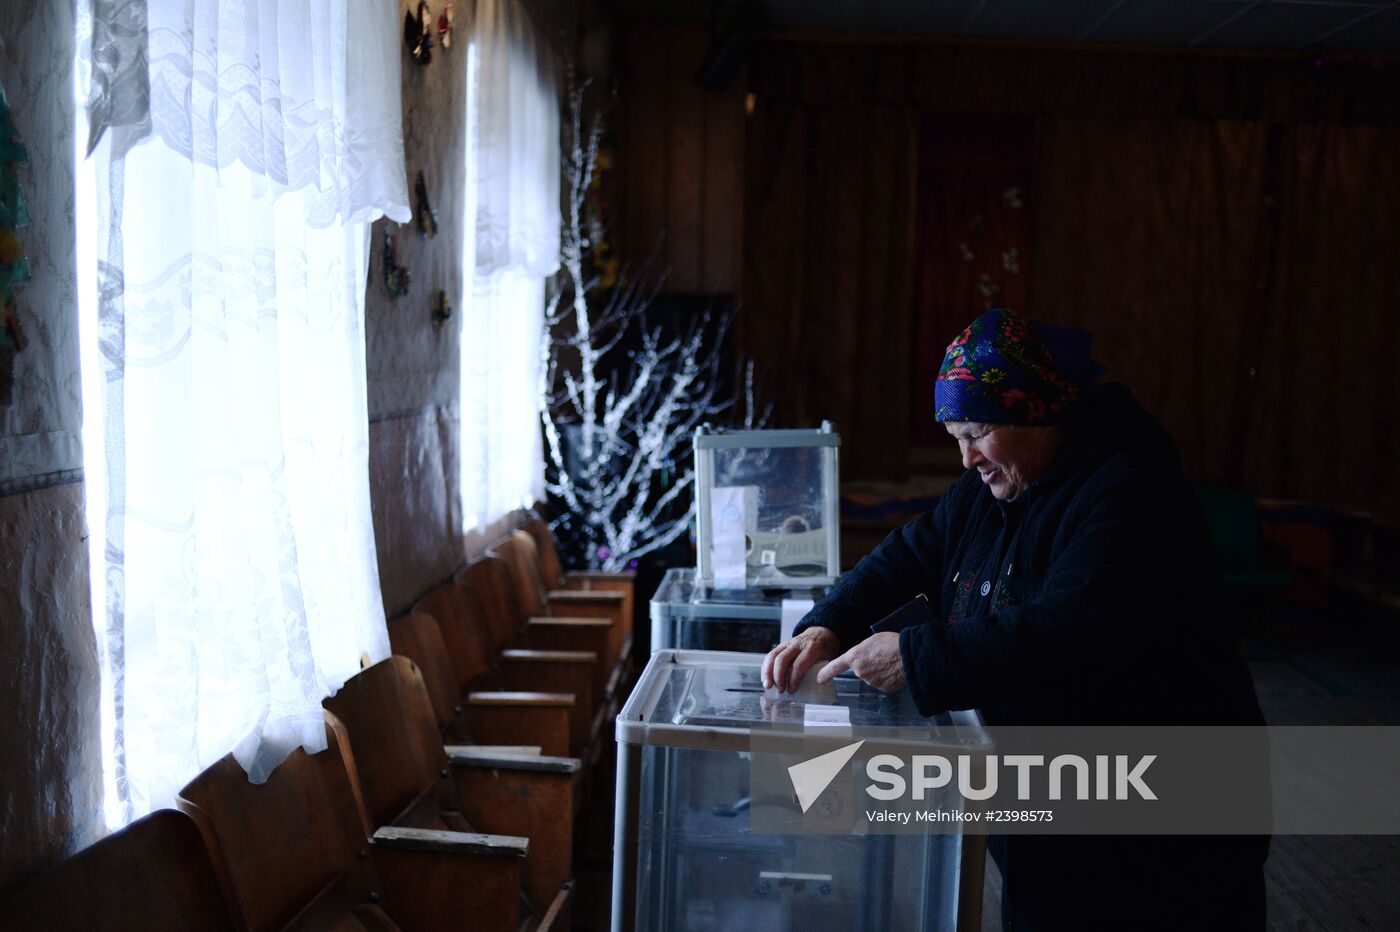 Sevastopol votes in Crimea secession referendum